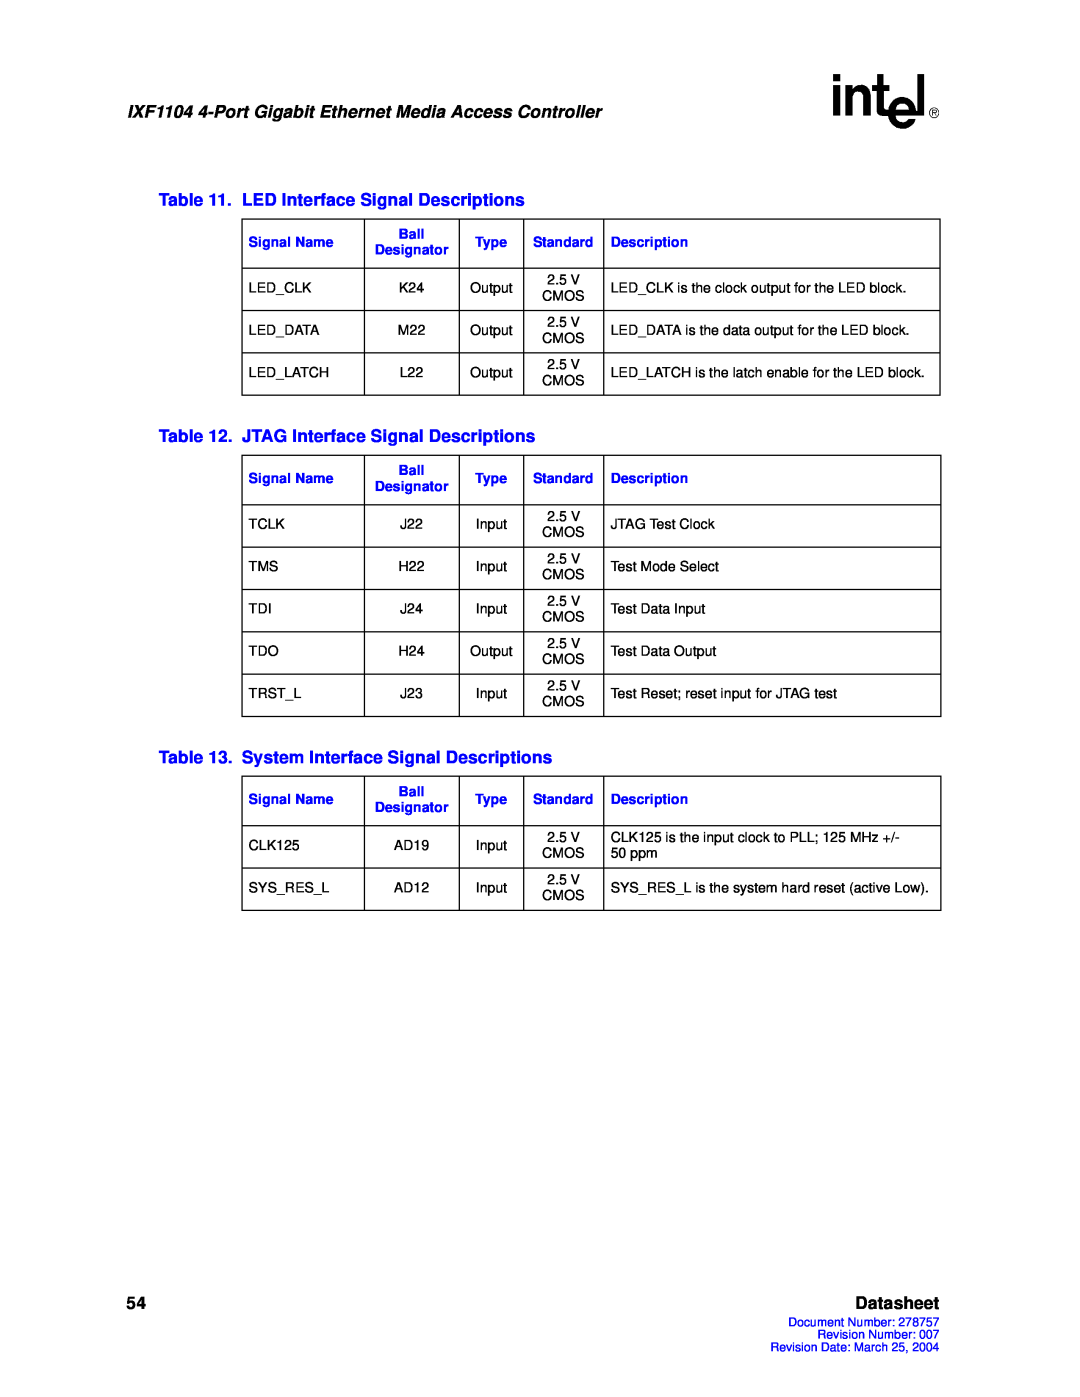 Intel IXF1104 LED Interface Signal Descriptions, JTAG Interface Signal Descriptions, System Interface Signal Descriptions 